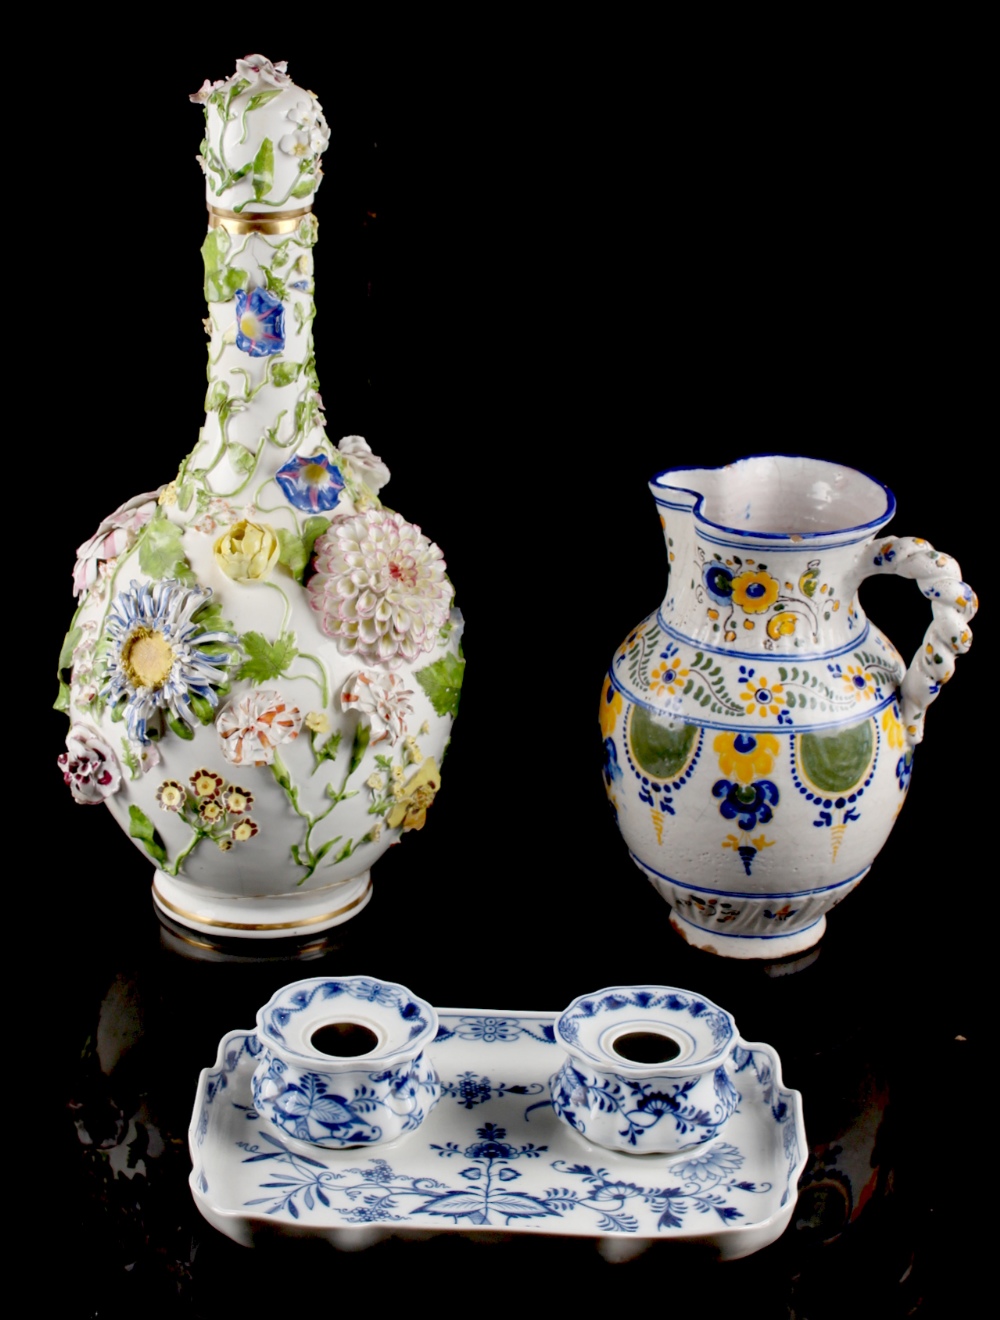 Property of a gentleman - a mid 19th century English porcelain floral encrusted bottle vase, blue